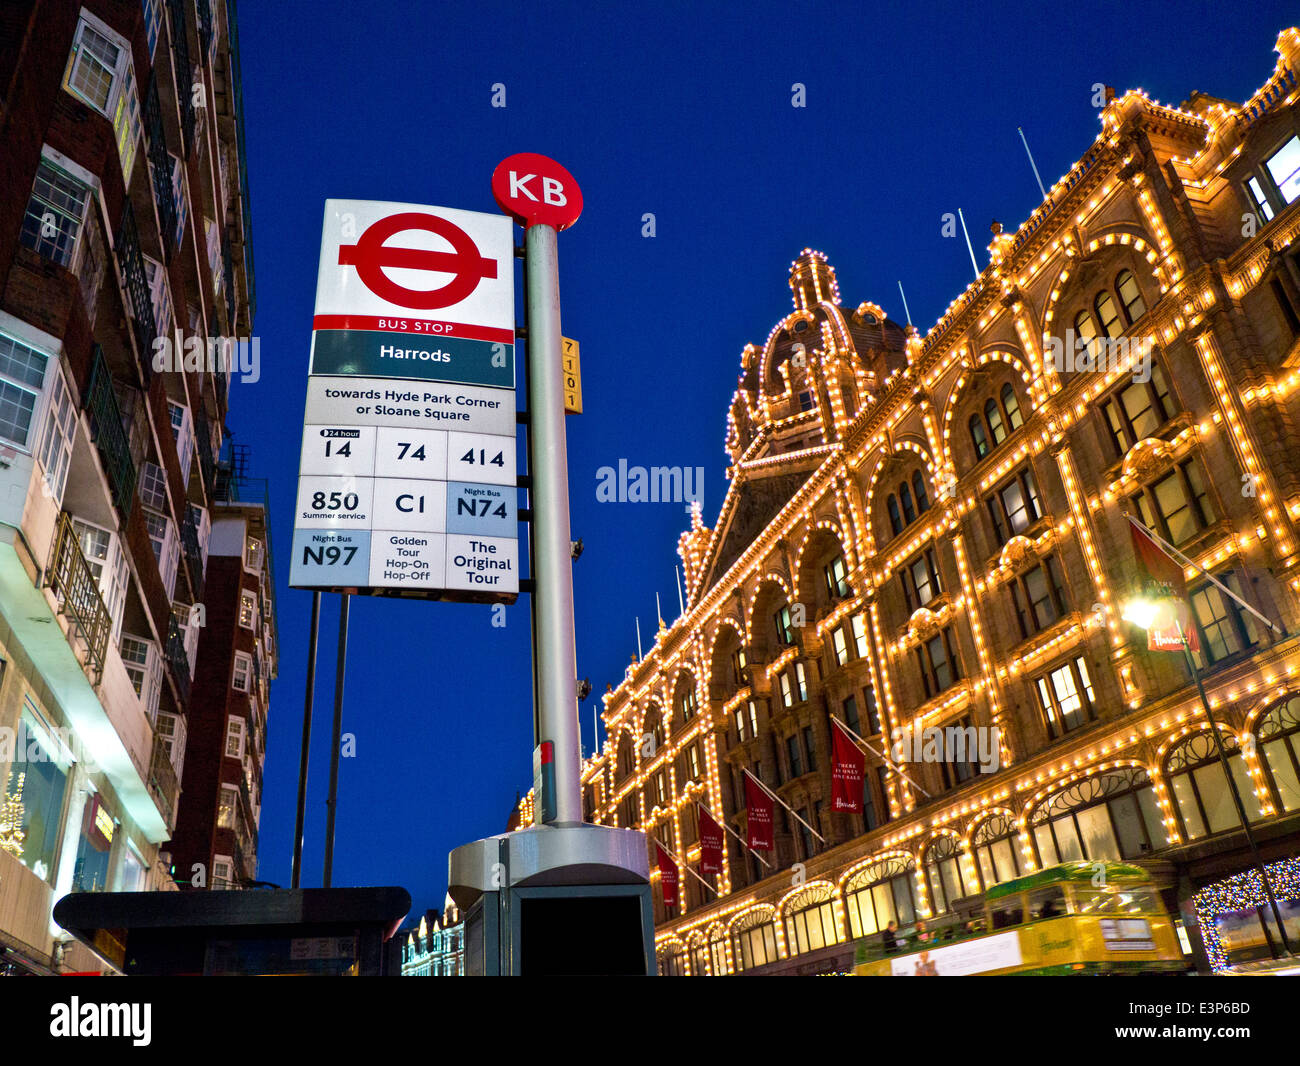 Bushaltestelle Harrods Kaufhaus bei Nacht mit eigener Bushaltestelle und am Harrods Tourbus vorbei in b/g Knightsbridge London UK Stockfoto